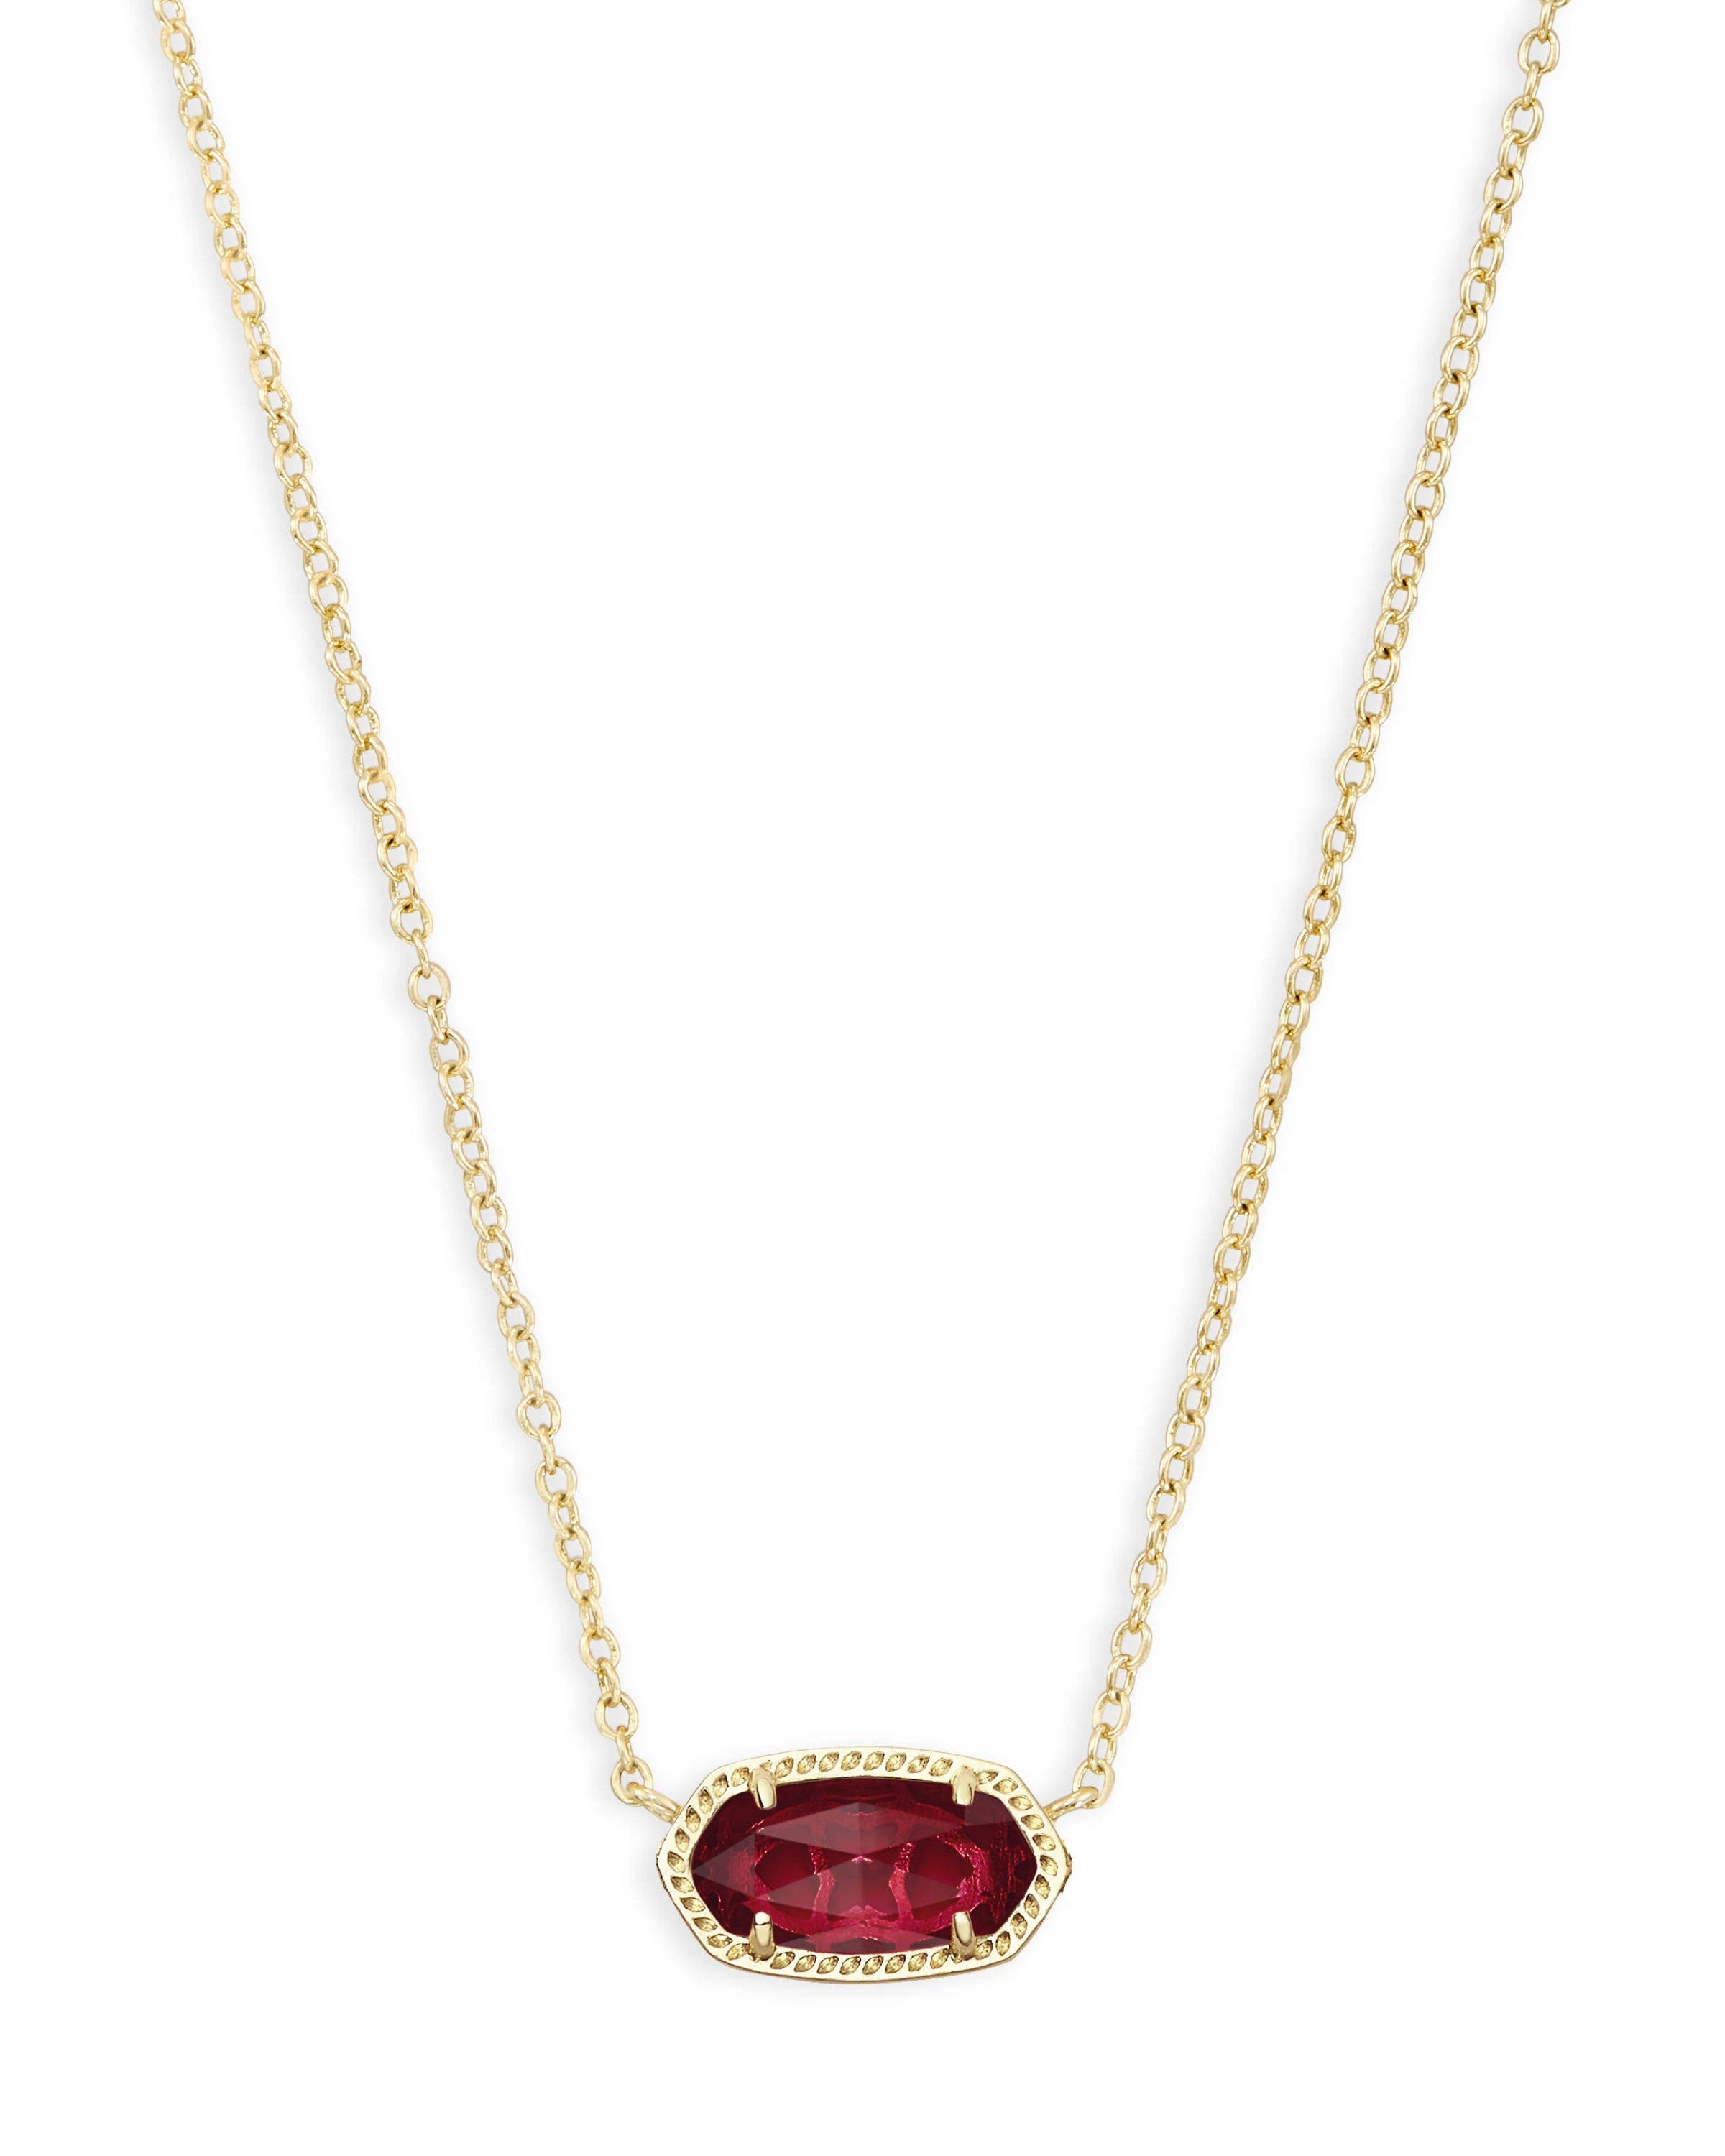 Berry Hued Elisa Gold Pendant Necklace | Image